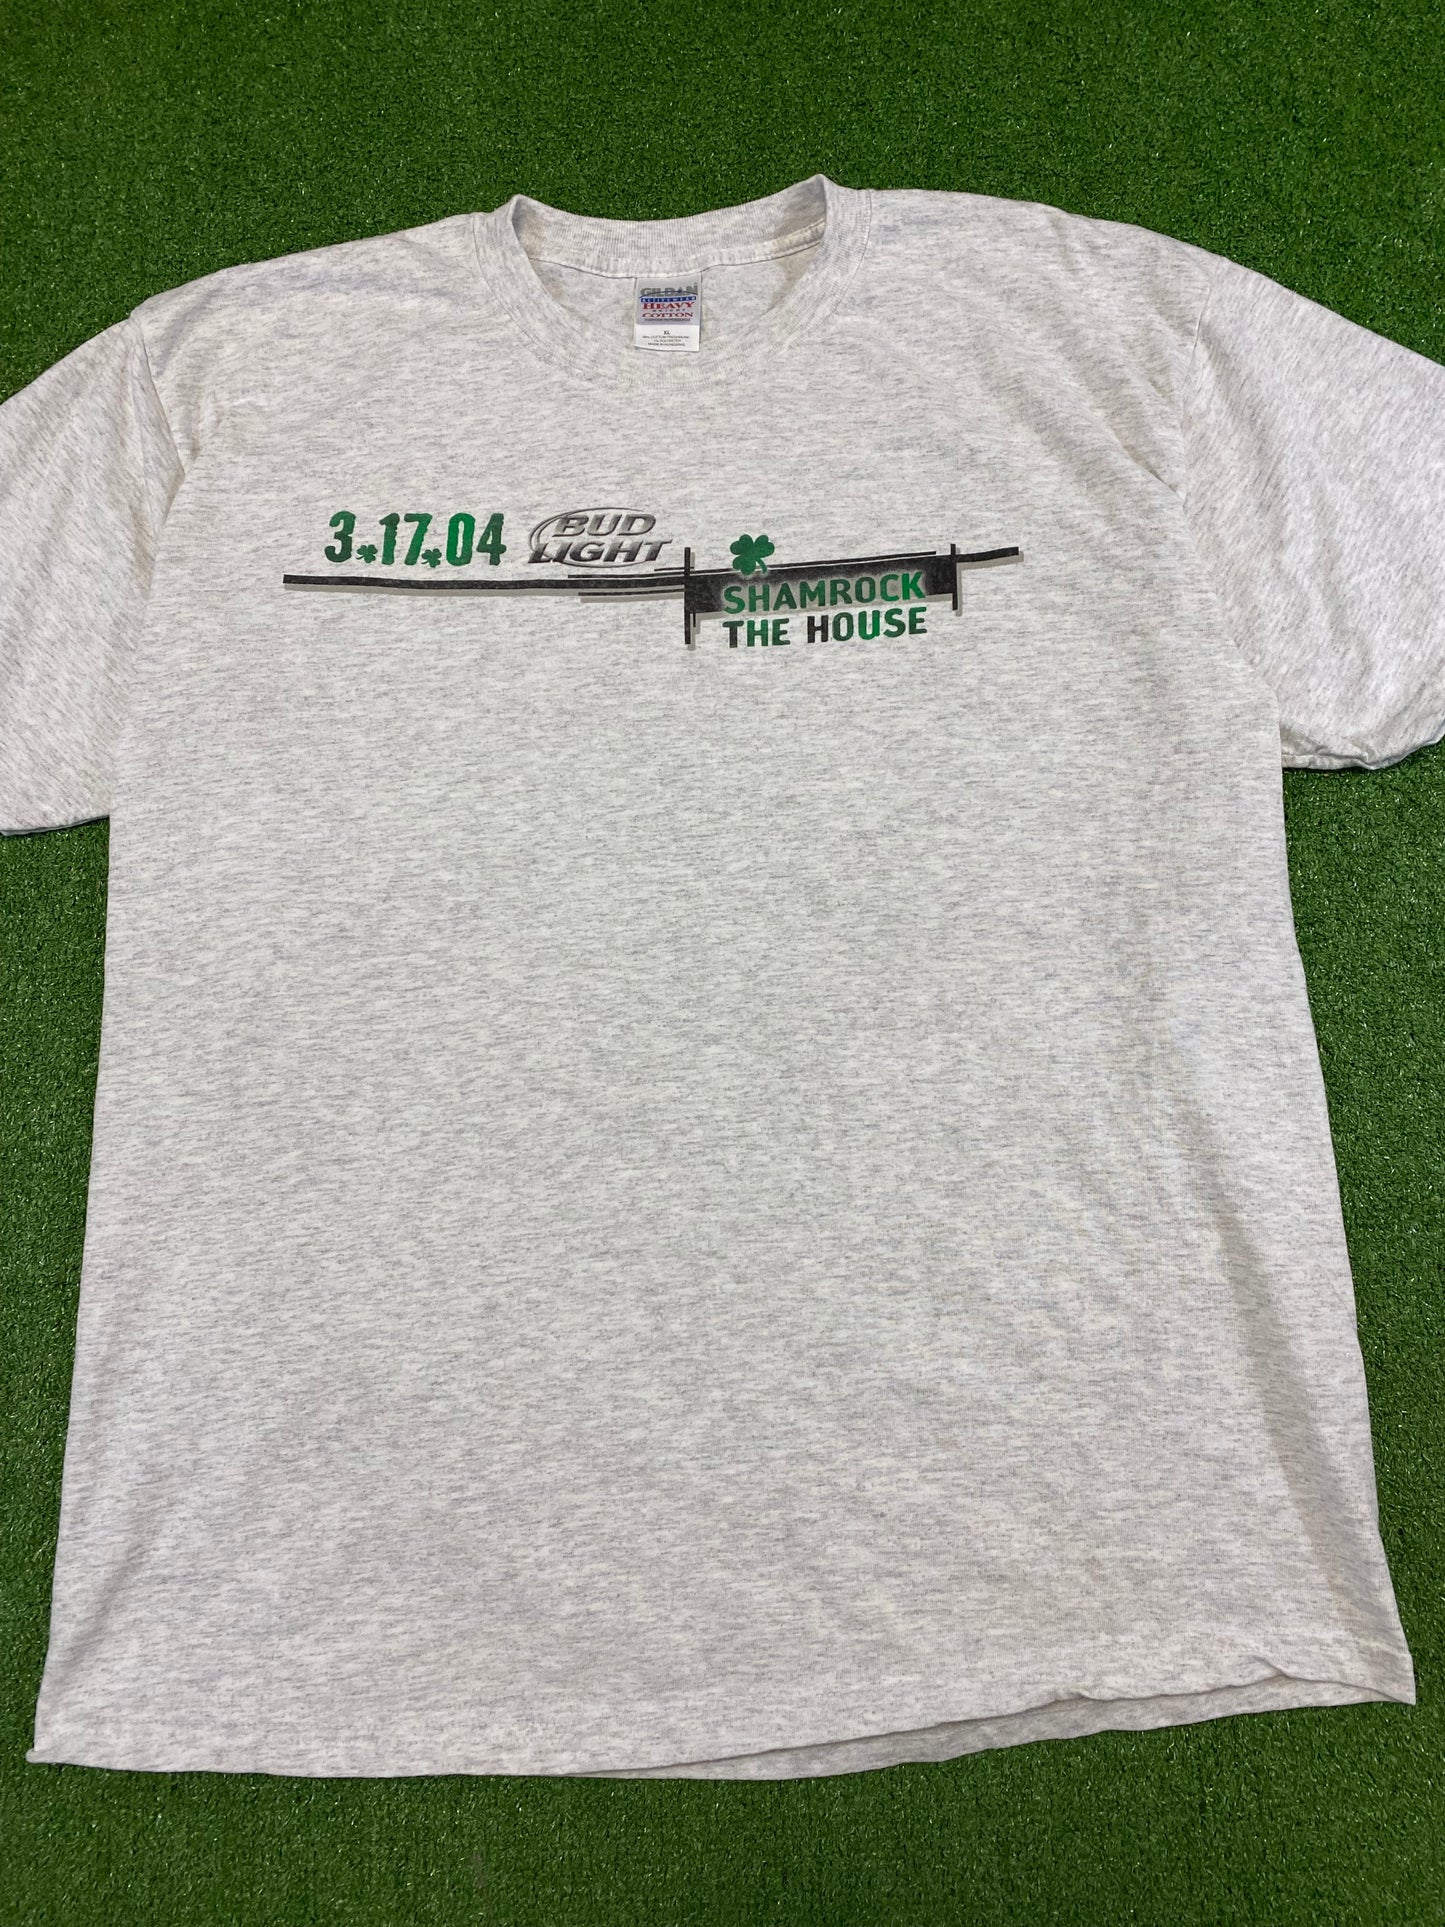 2004 Bud Light St Patrick’s Day T-Shirt XL